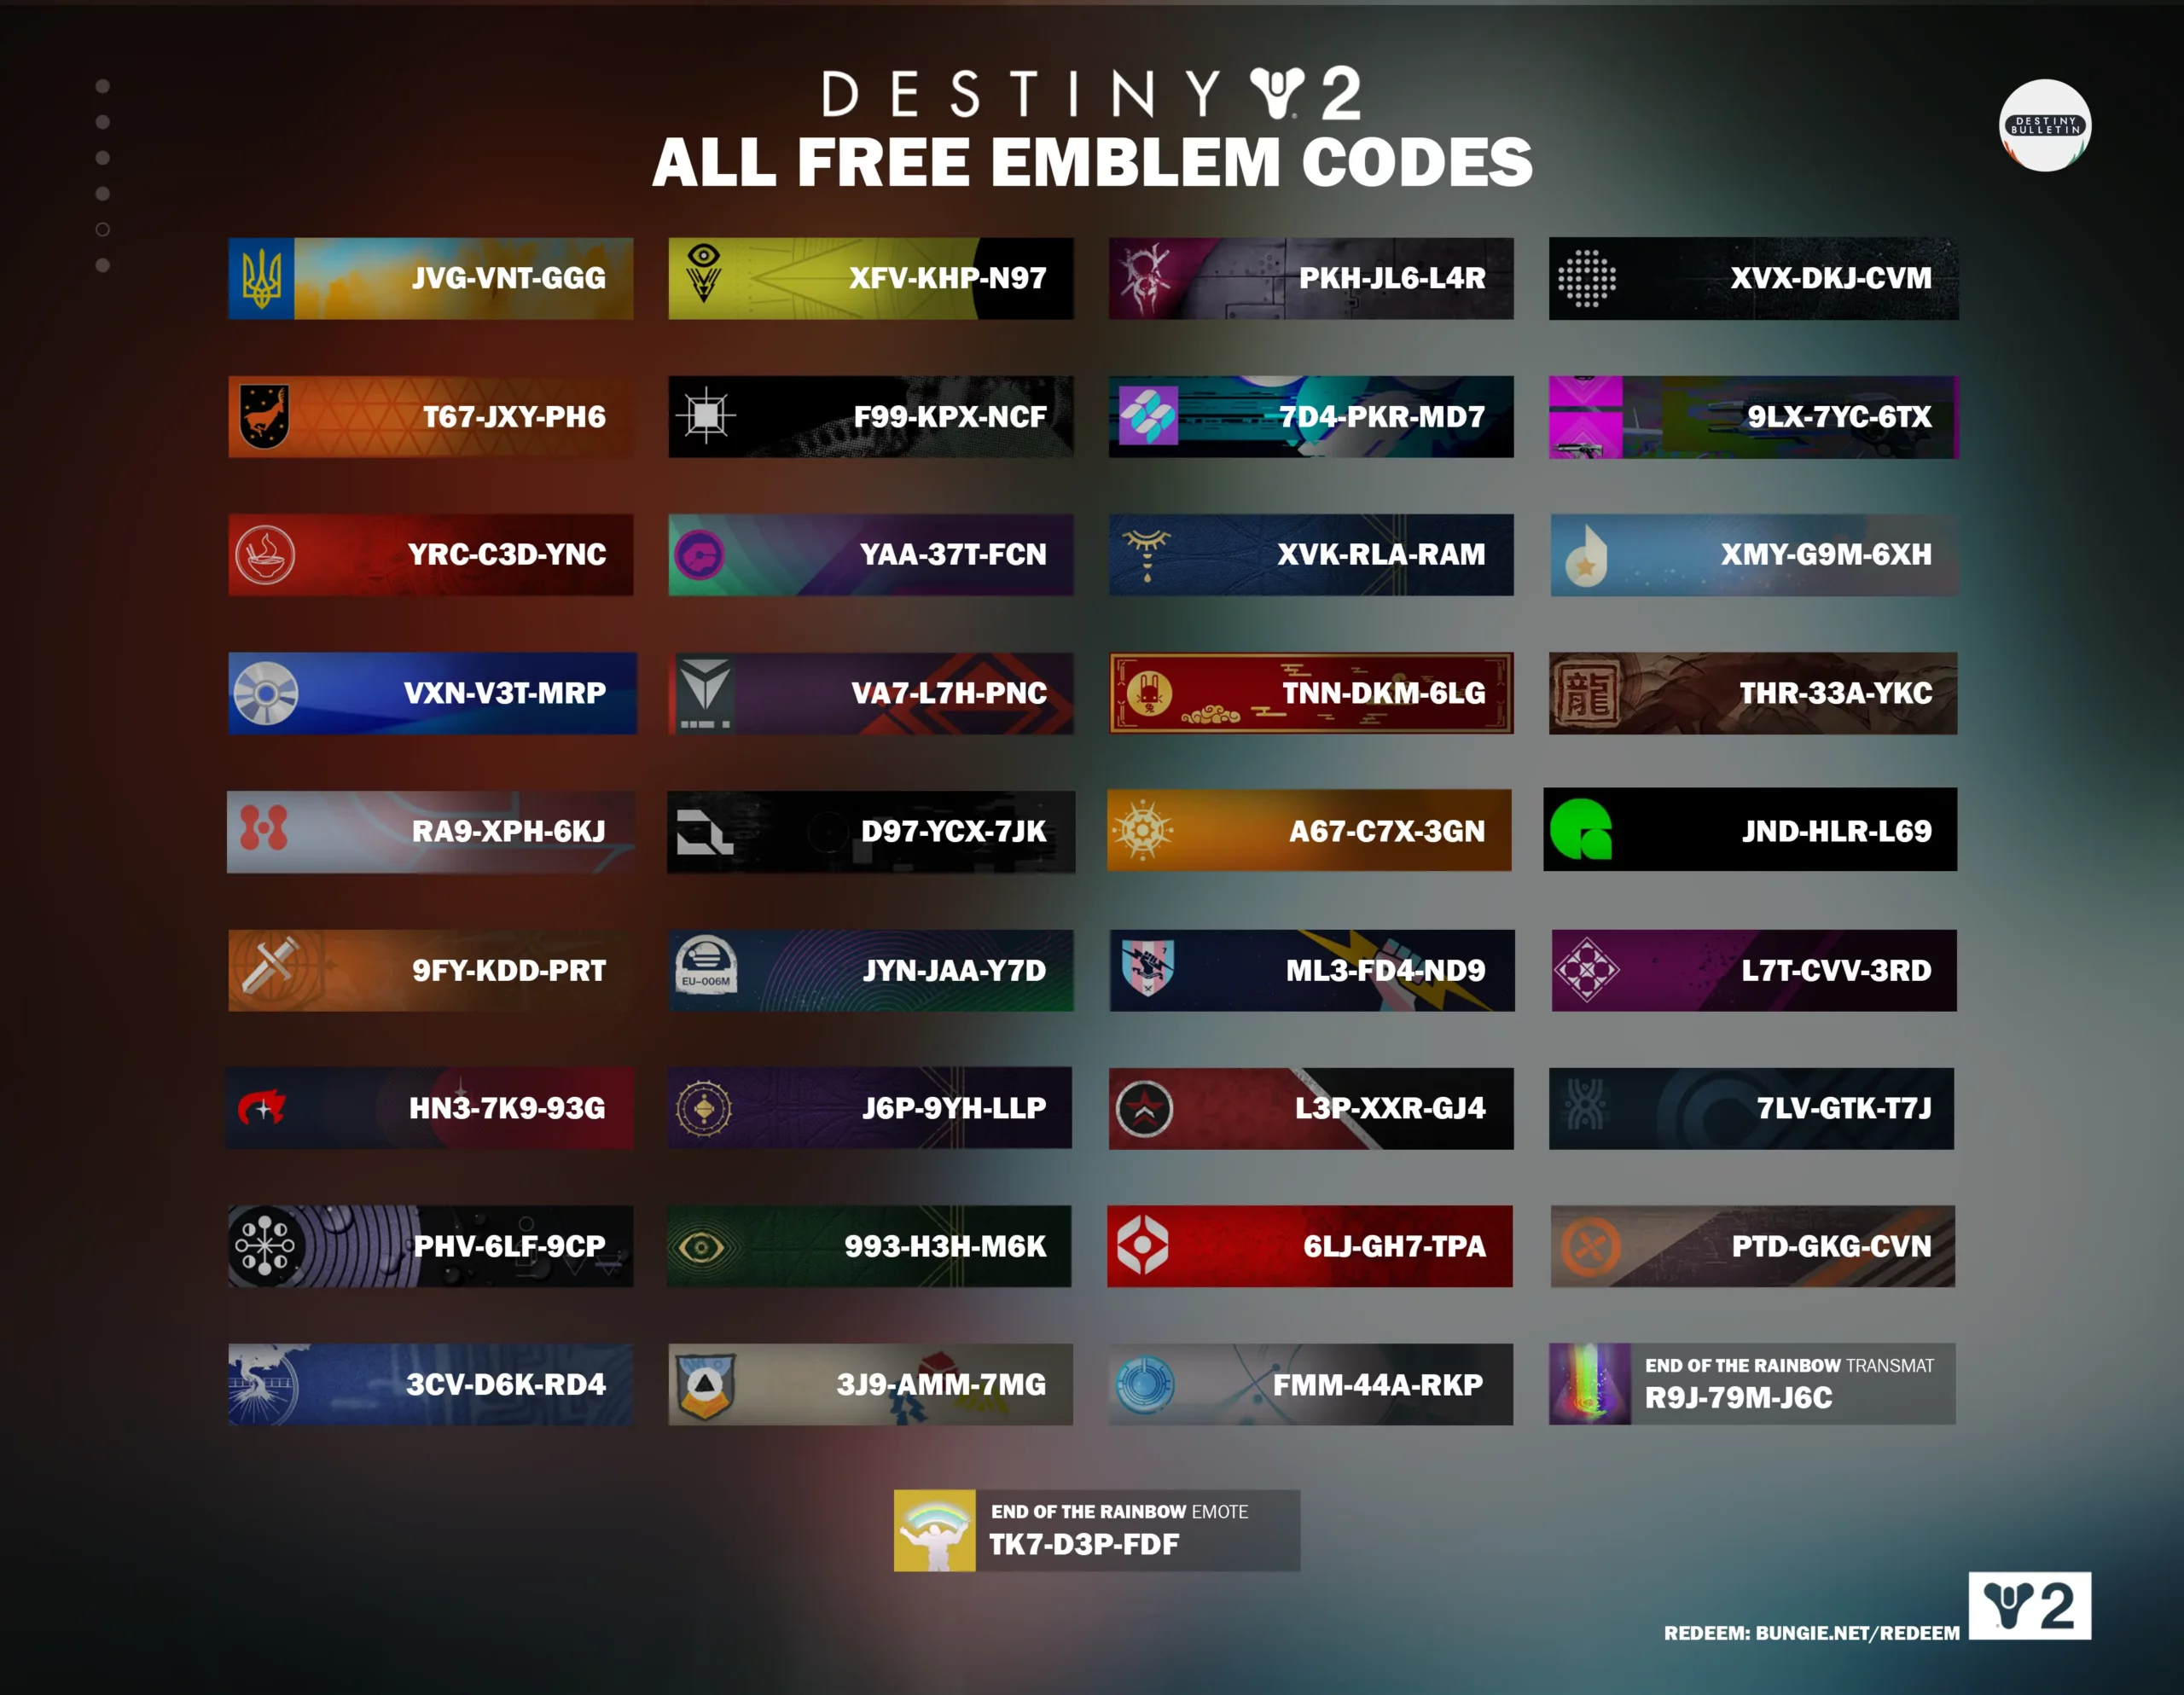 Destiny 2 all free emblem codes updated